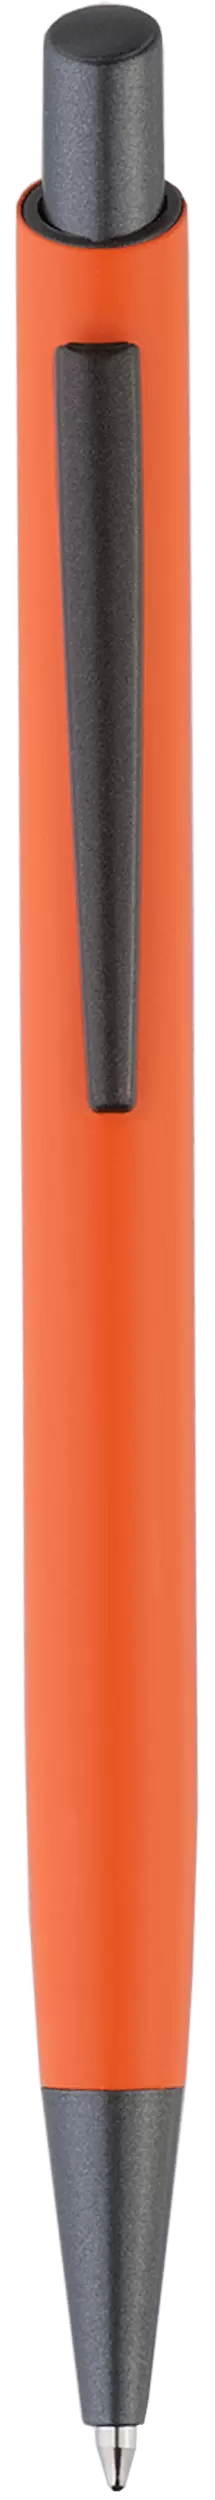 Ручка ELFARO TITAN Оранжевая 3052-05